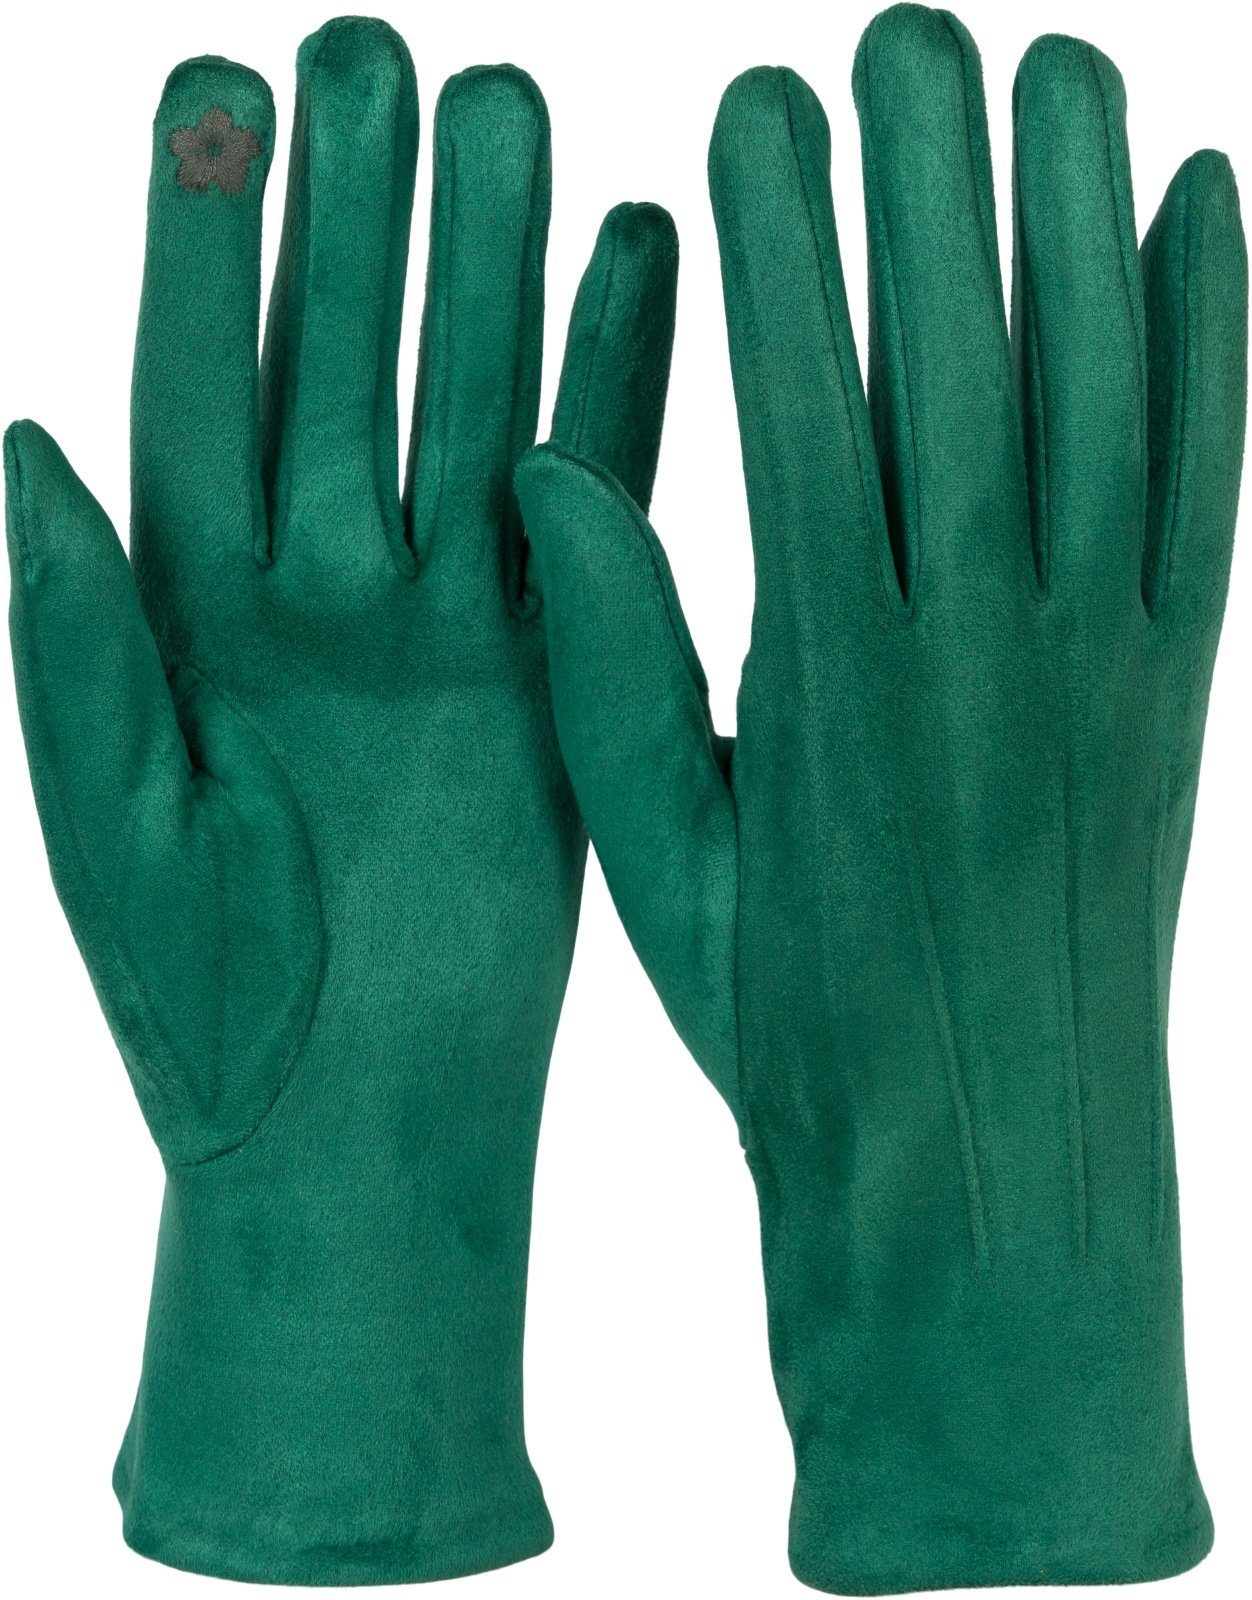 styleBREAKER Fleecehandschuhe Einfarbige Touchscreen Handschuhe Ziernähte Dunkelgrün